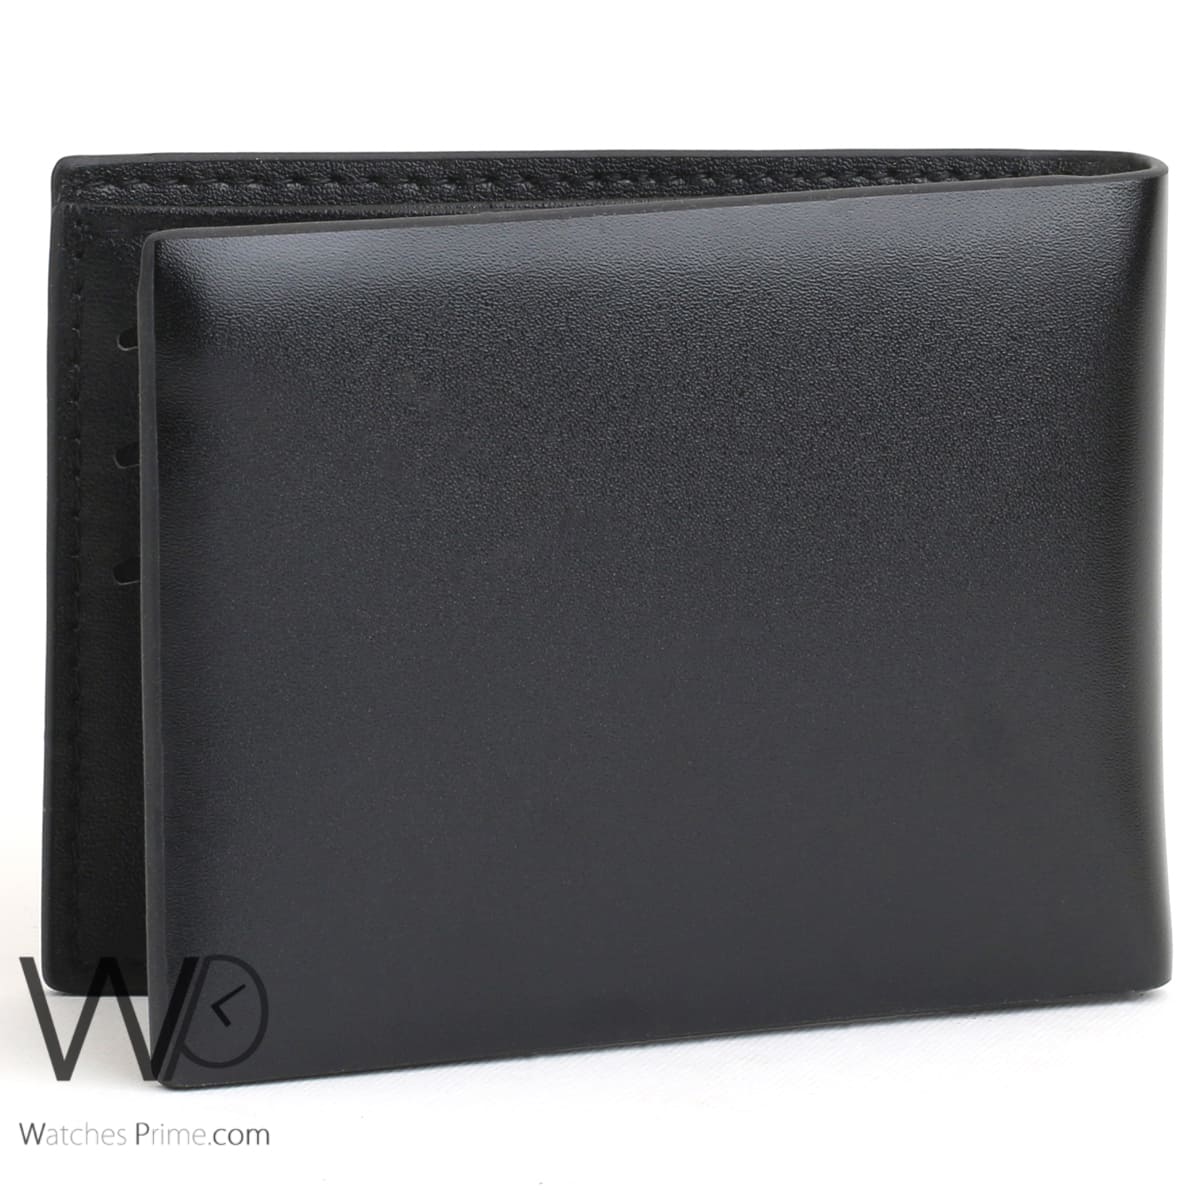 Mont blanc wallet for men black | Watches Prime